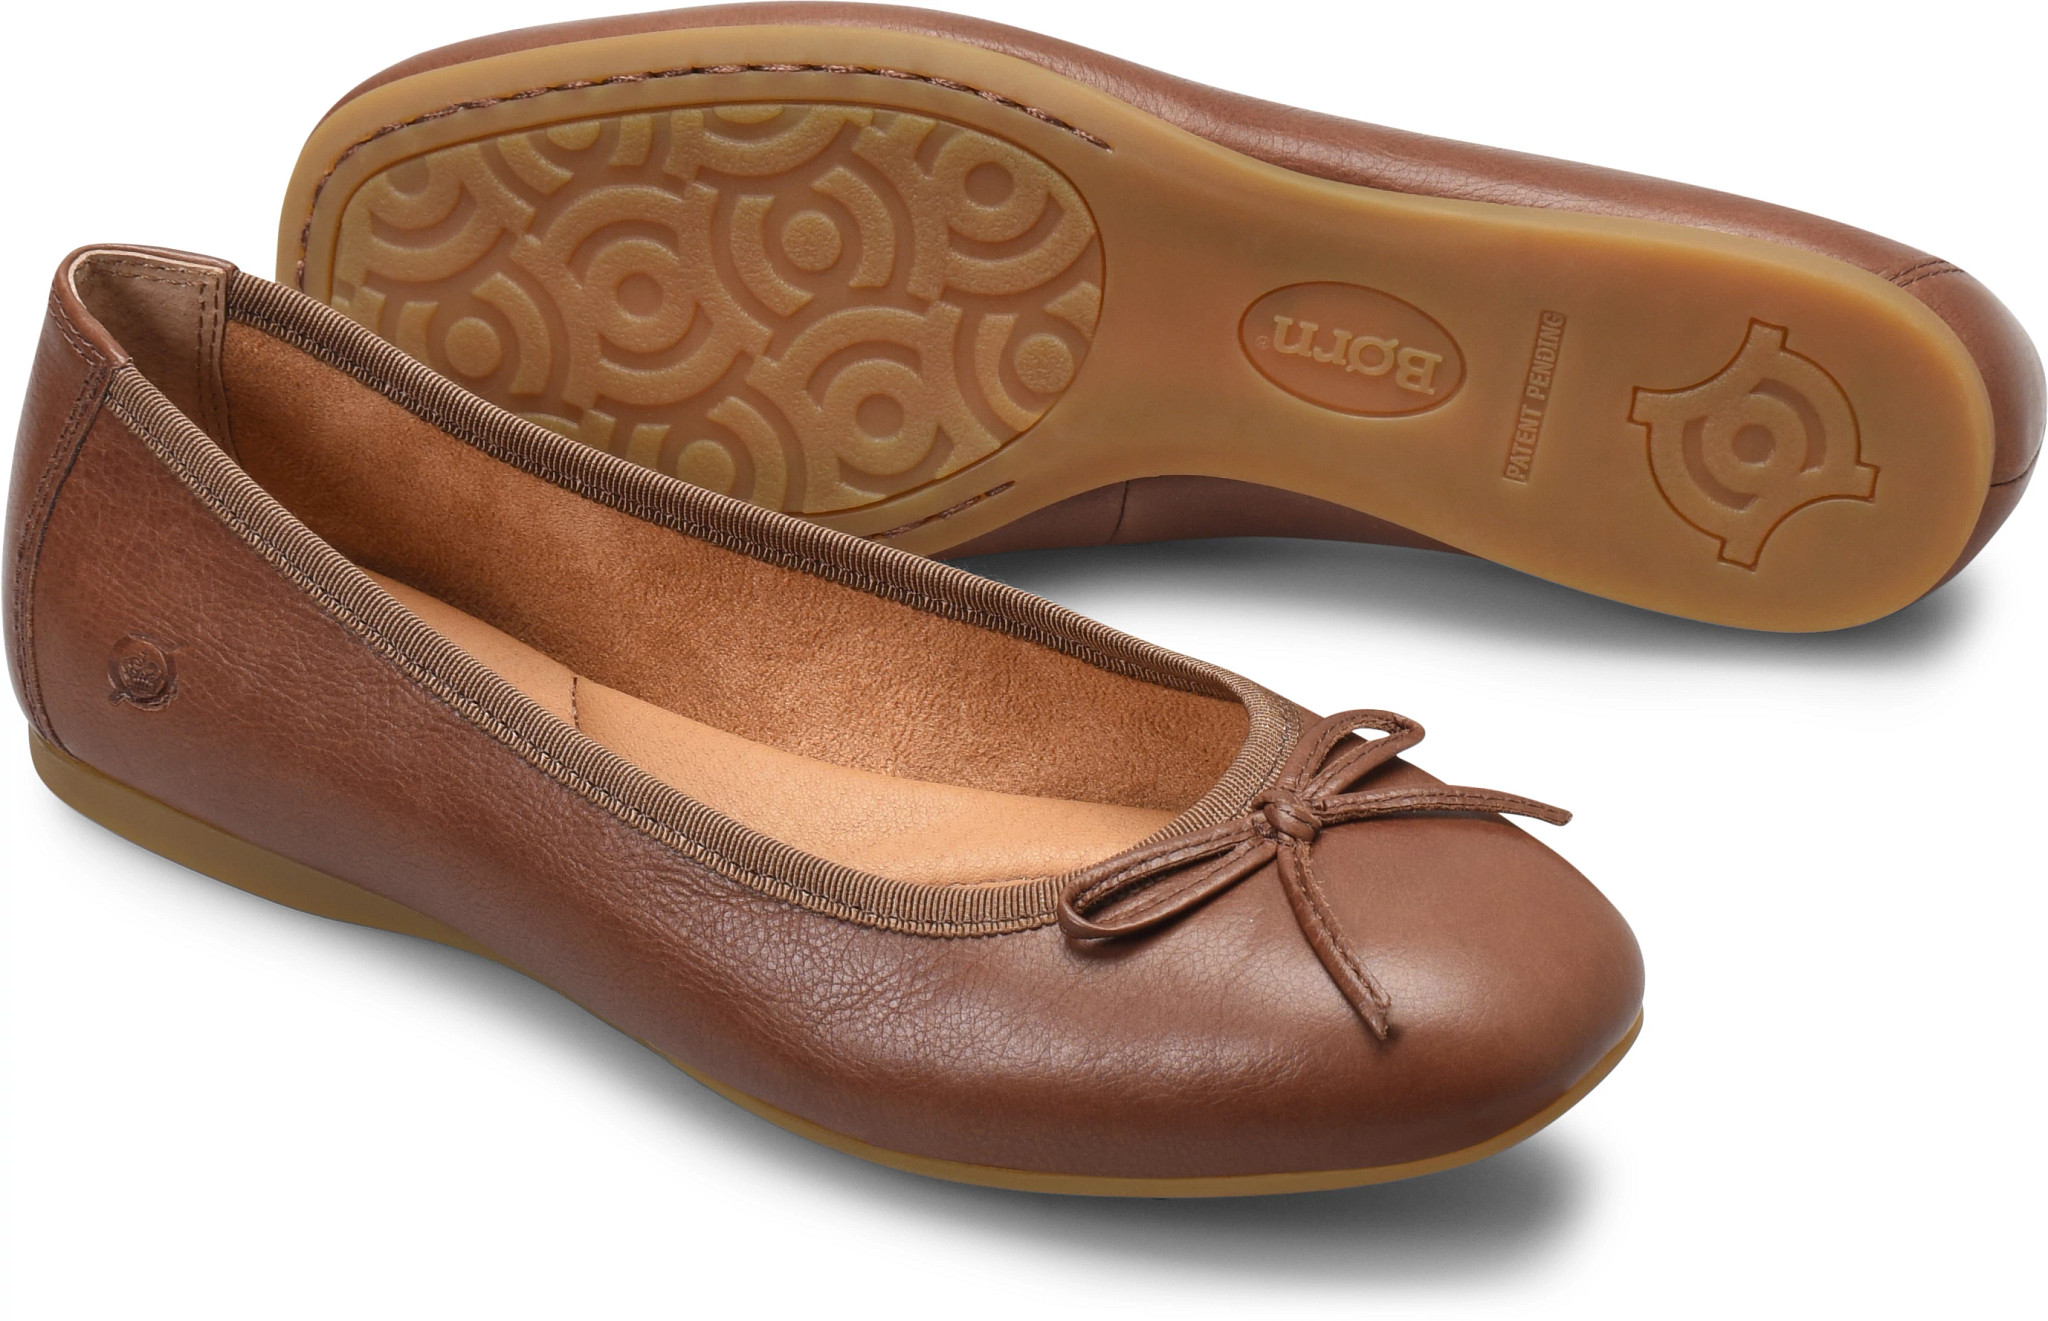 Schoenen damesschoenen Instappers Loafers Born ladies leather flats size 8.5 